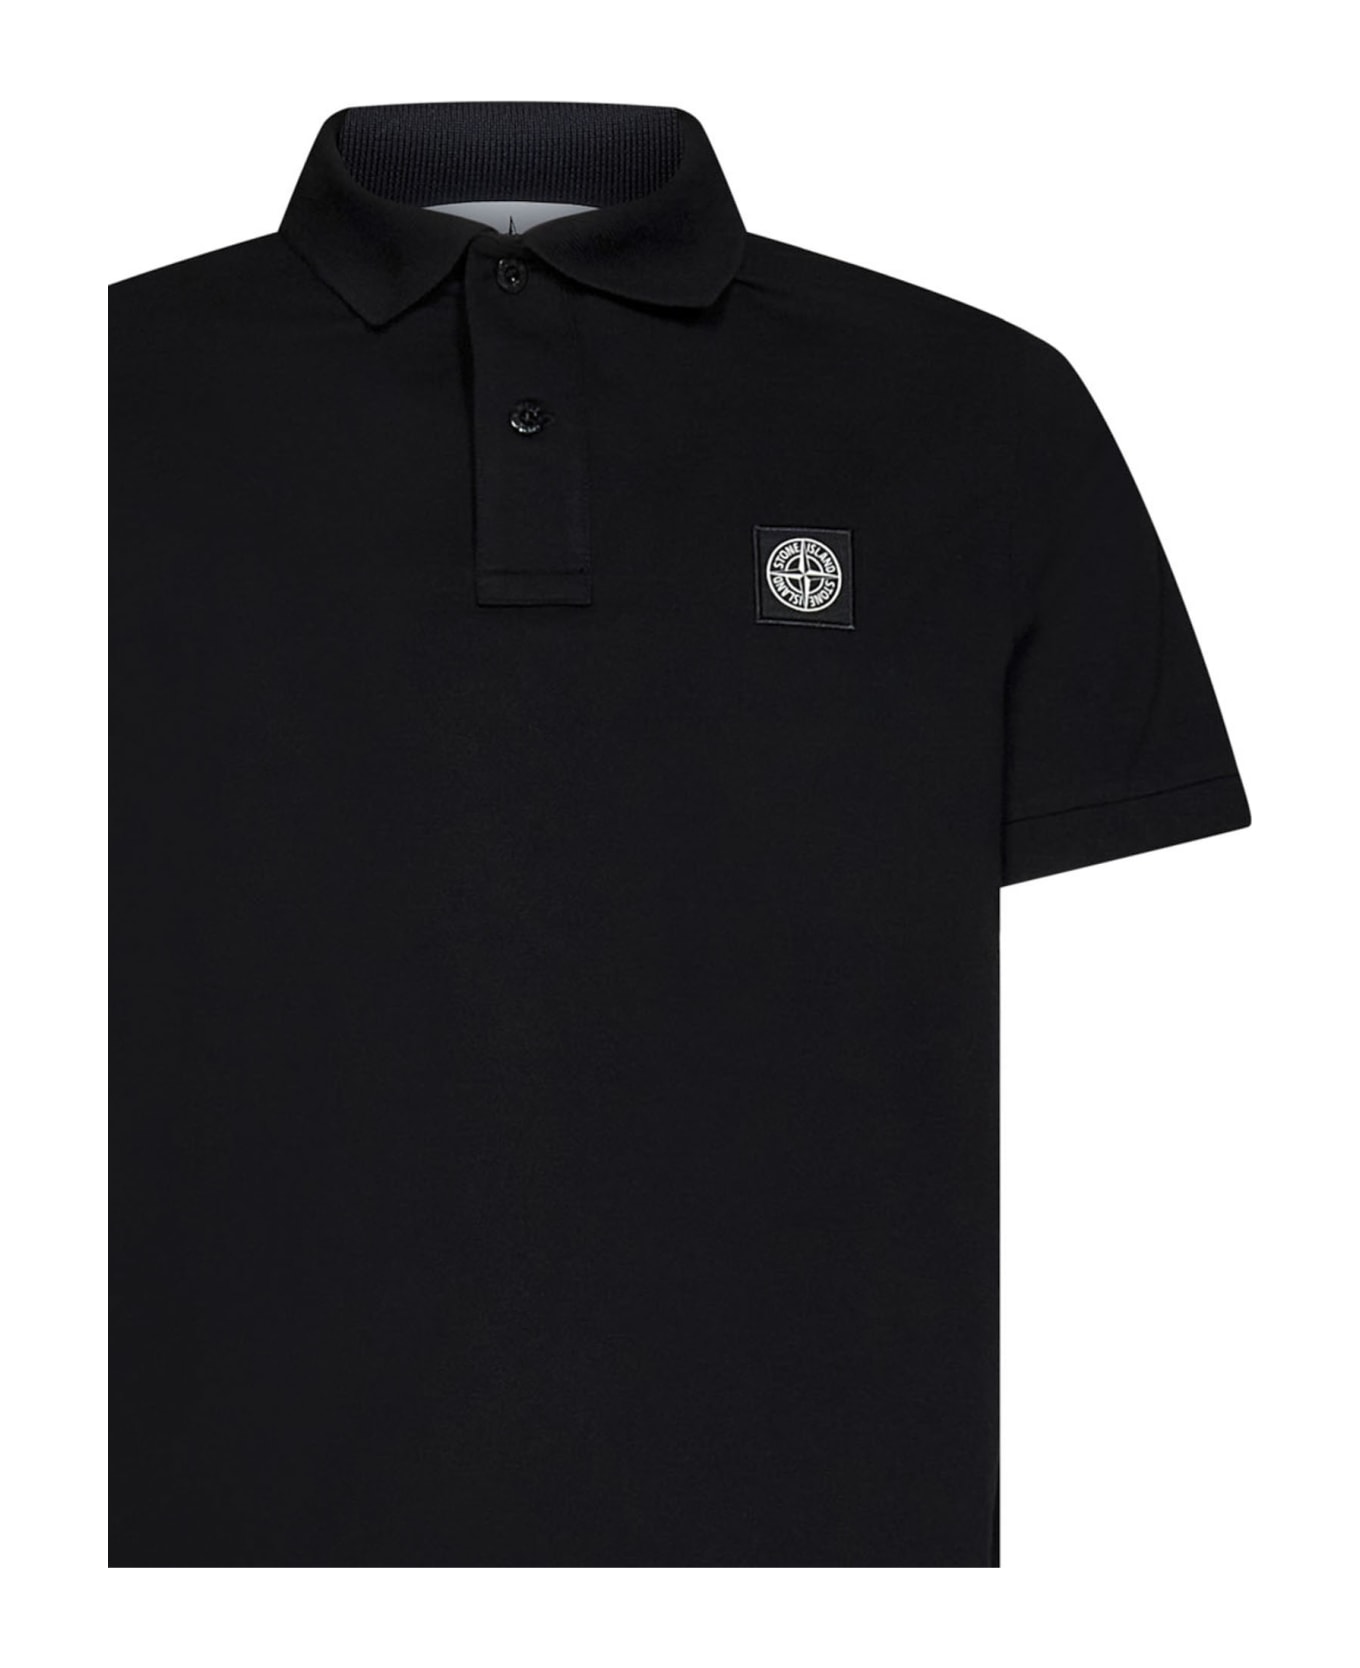 Stone Island Polo Shirt - Black